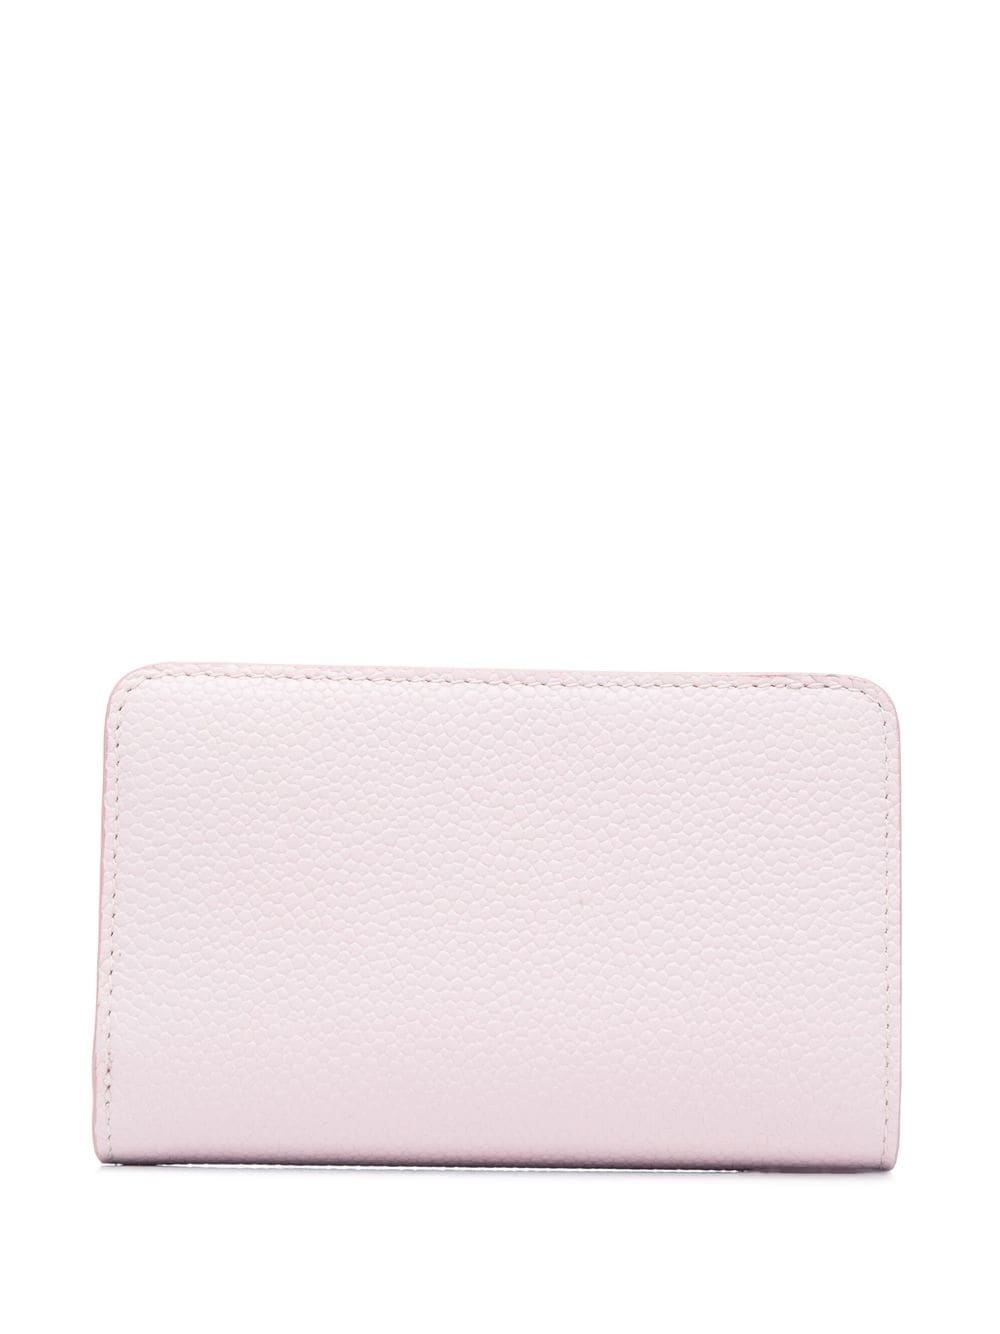 Ninon de Lancel compact wallet - 2